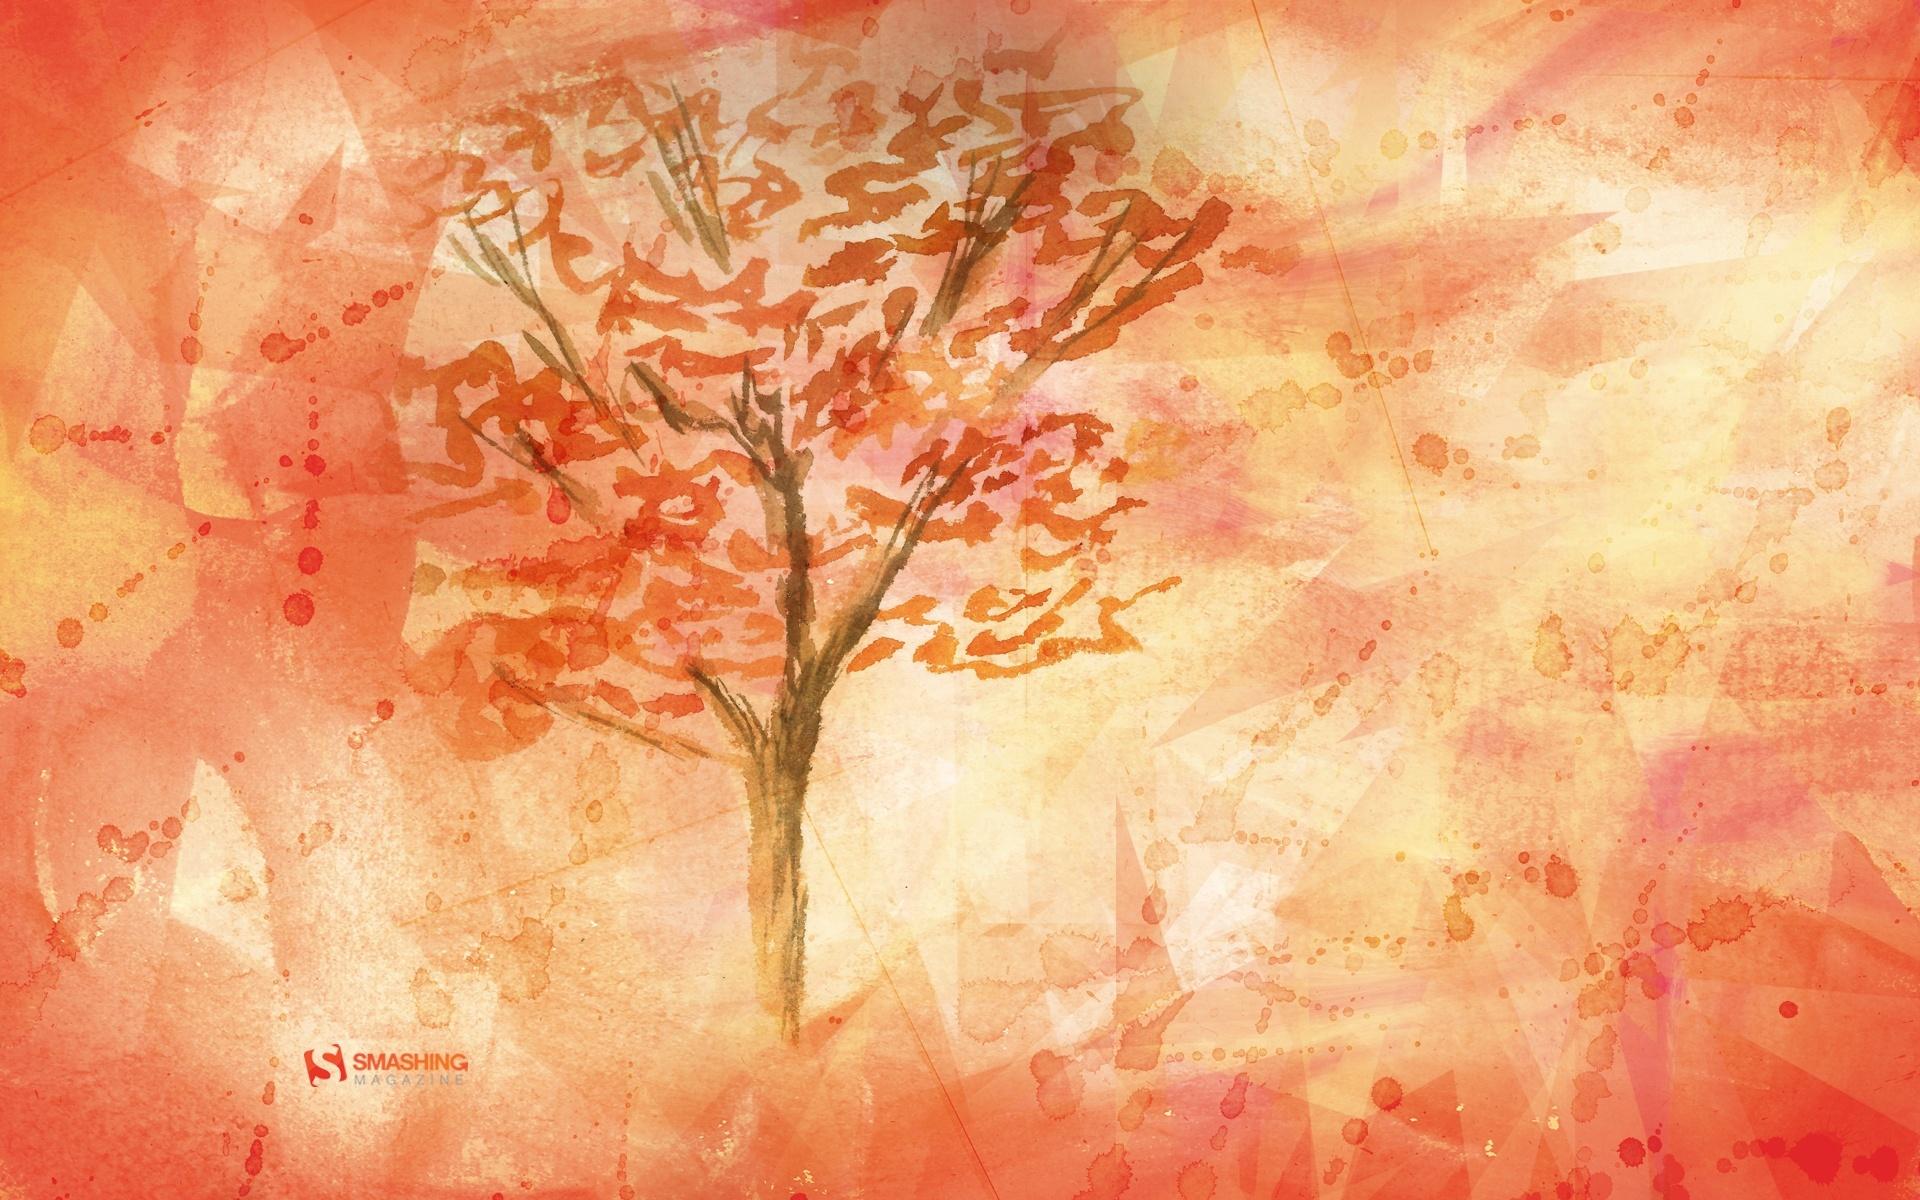 Fall in October Wallpaper in jpg format for free download